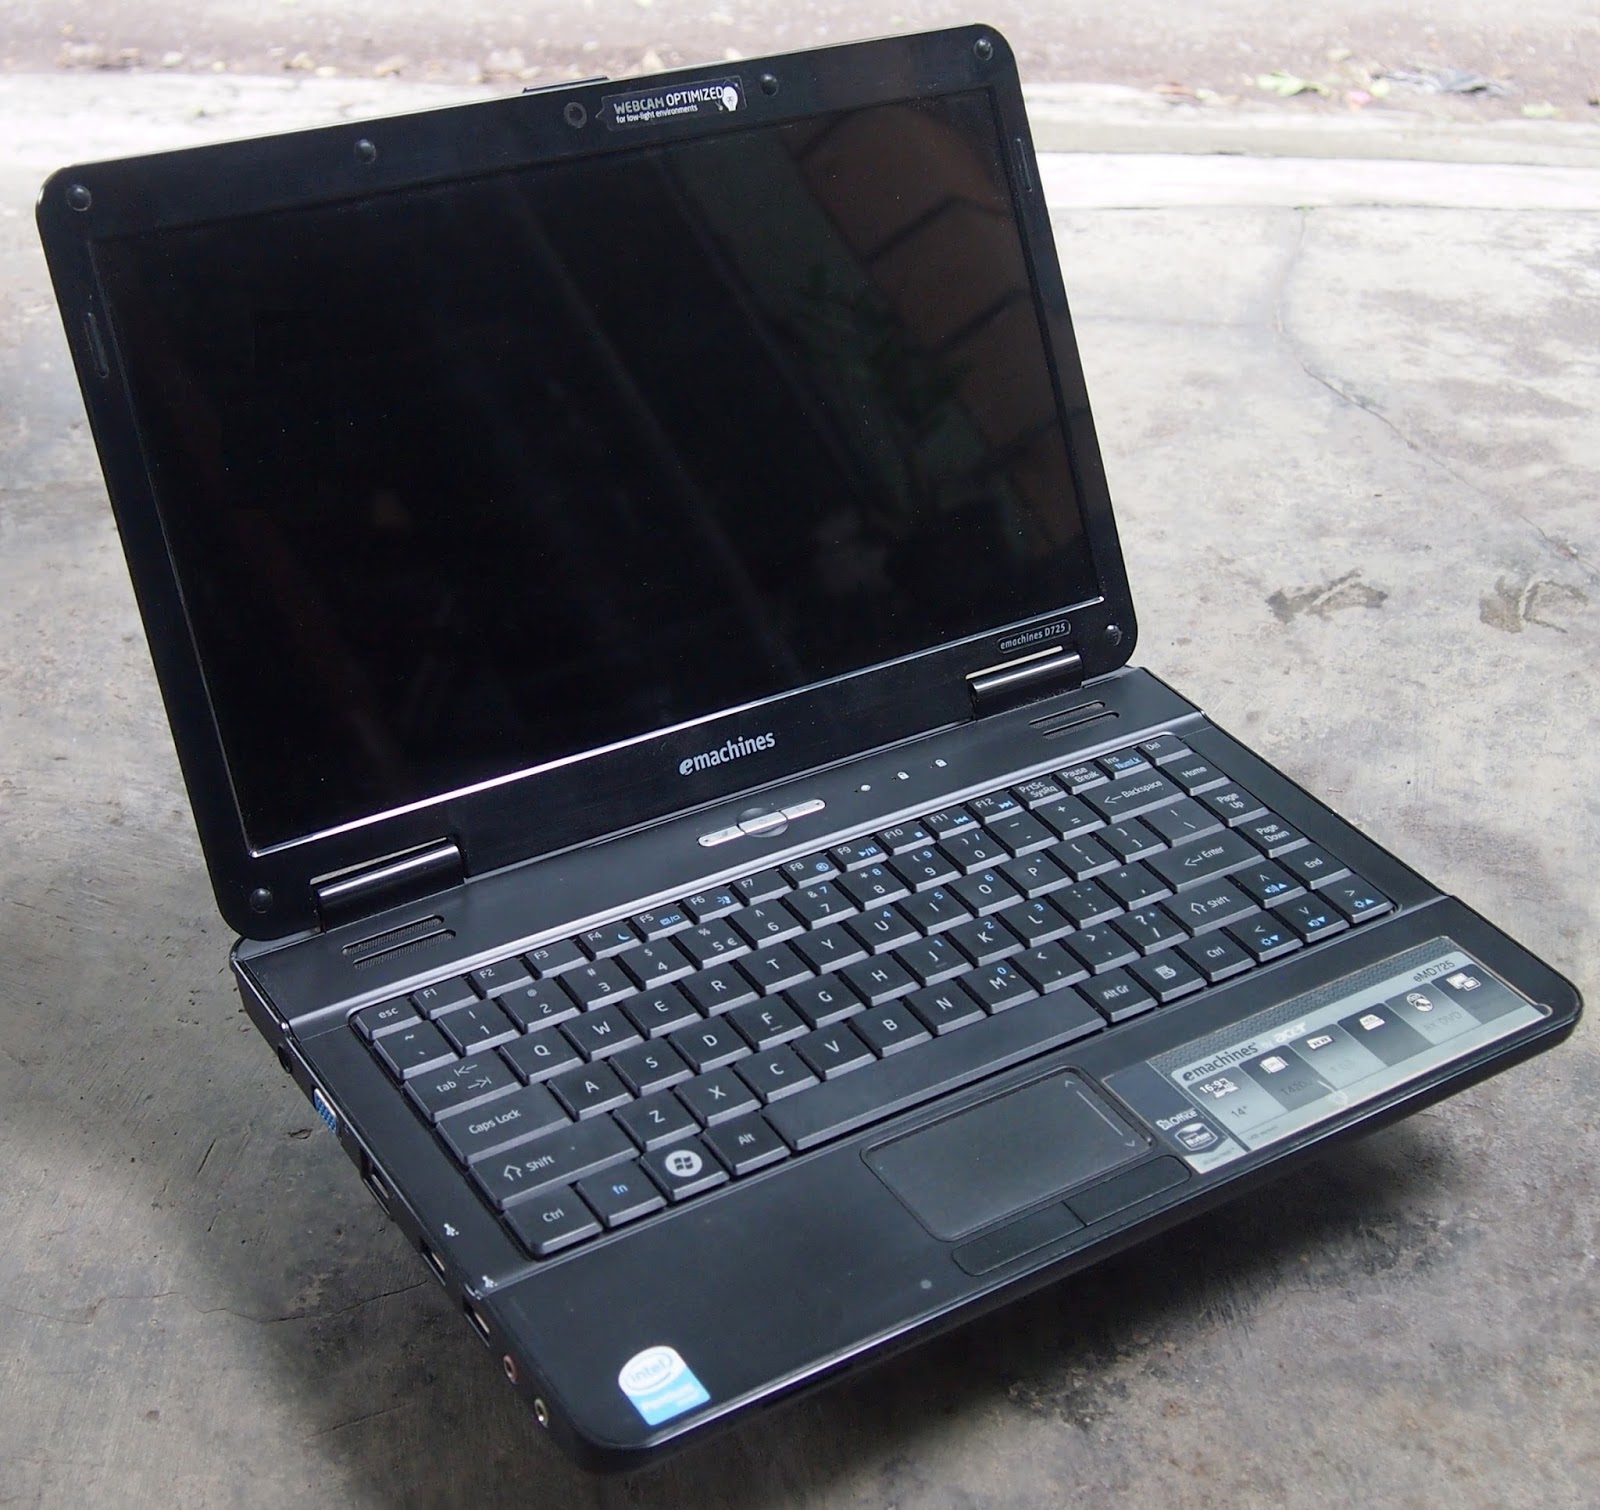 Laptop Bekas Acer Emachine D725